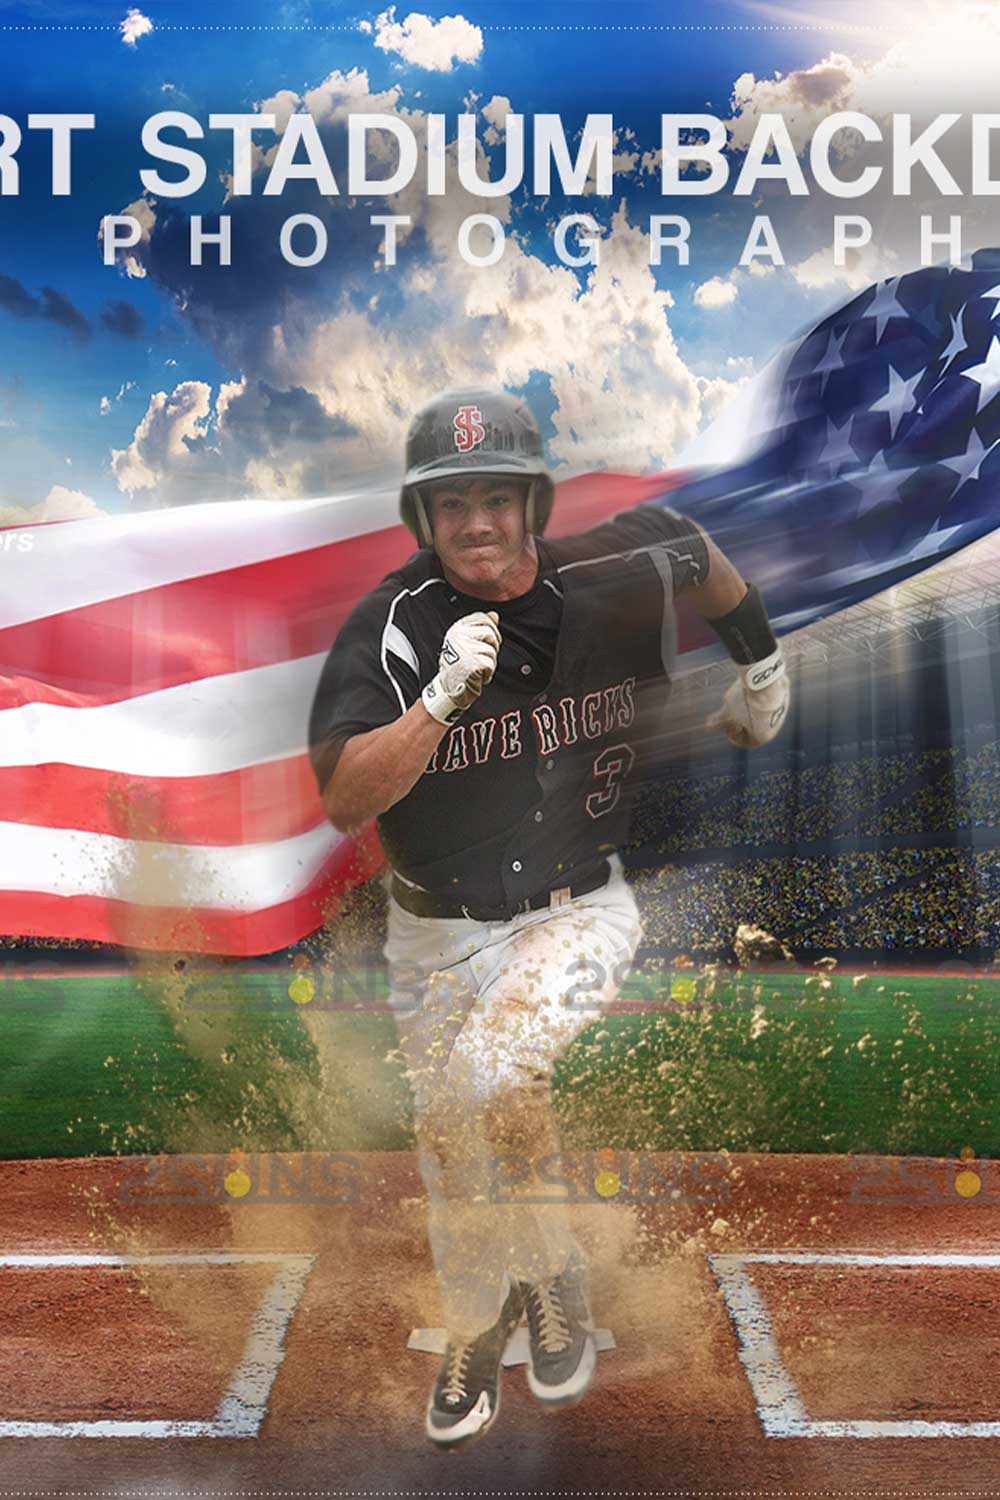 Baseball USA Backdrop Sports Digital Photoshop Overlay Pinterest Image.